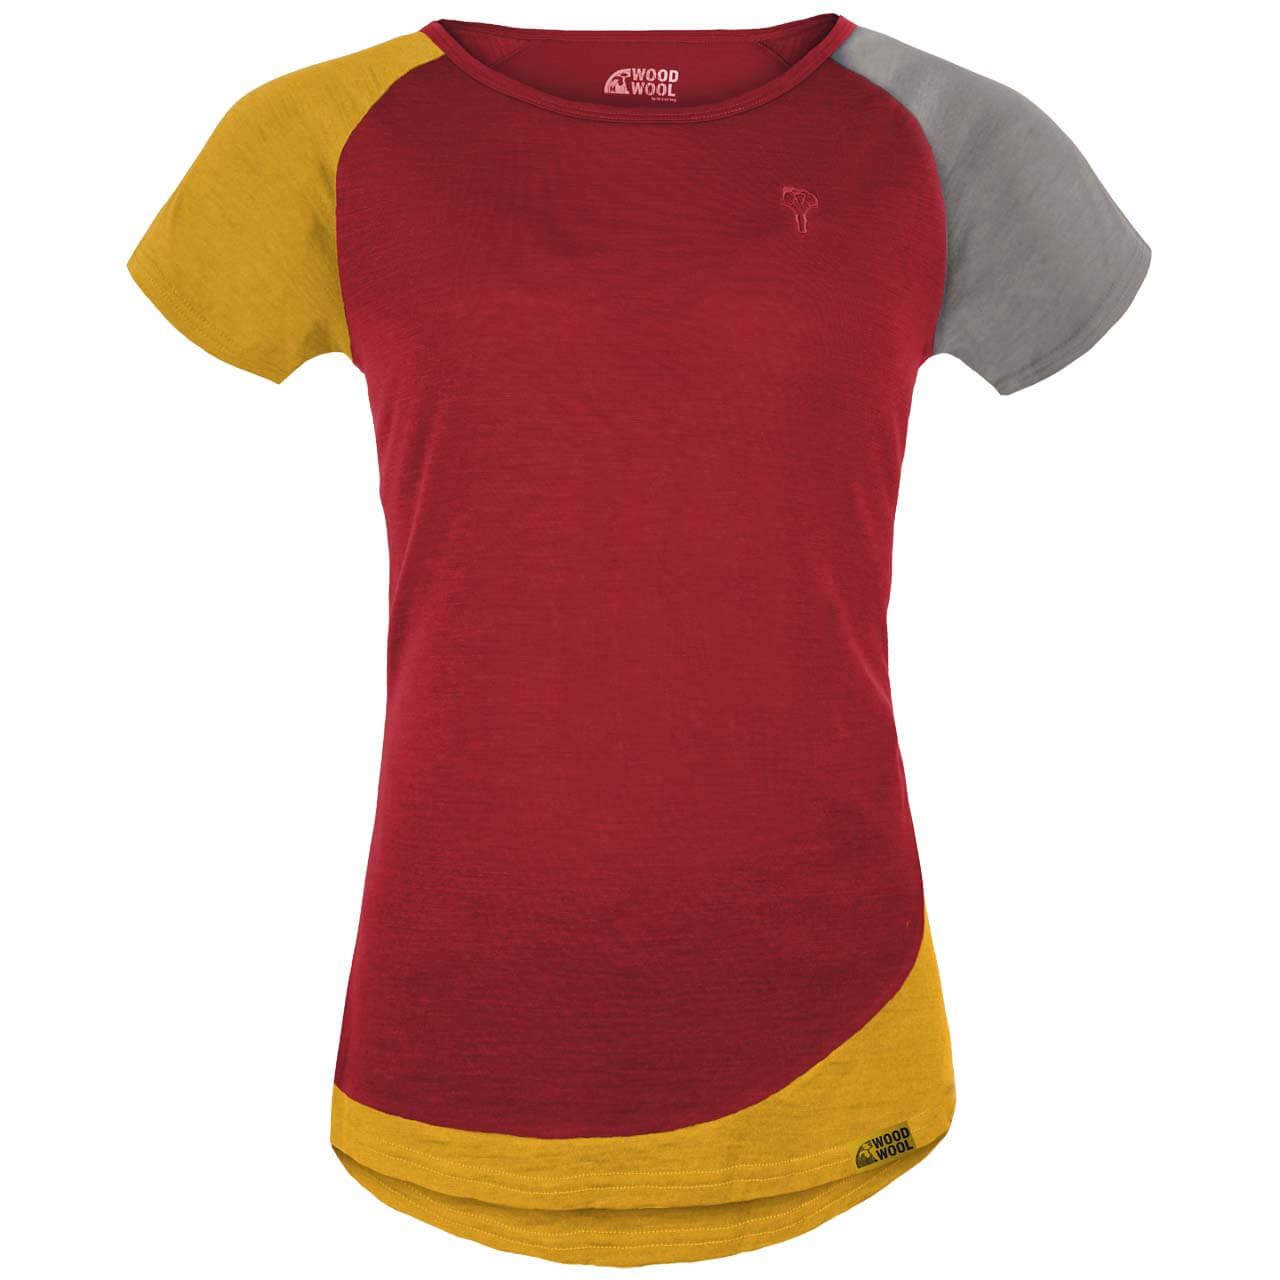 Grüezi Bag WoodWool Janeway T-Shirt - Fired Red Brick, XS von Grüezi Bag}